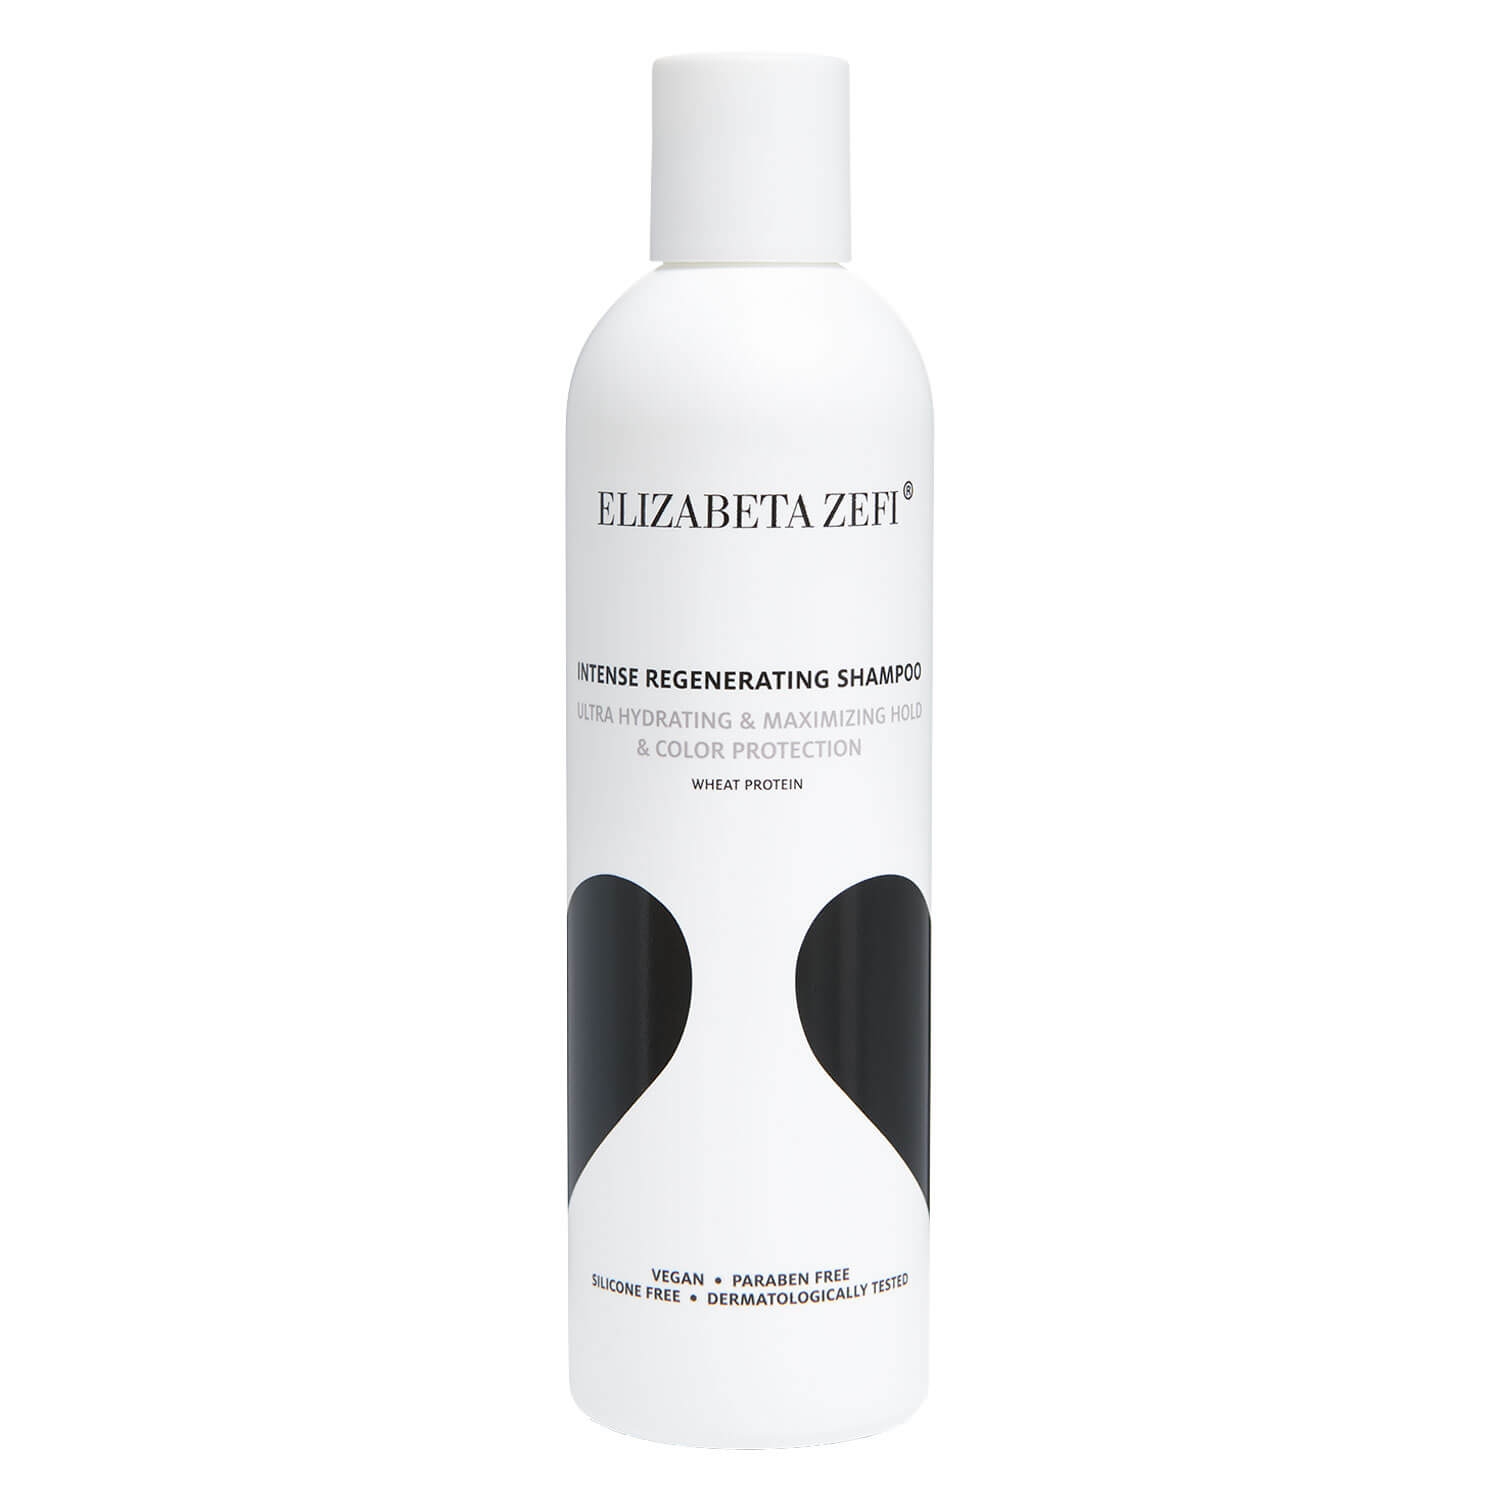 Produktbild von Elizabeta Zefi - Intense Regenerating Shampoo